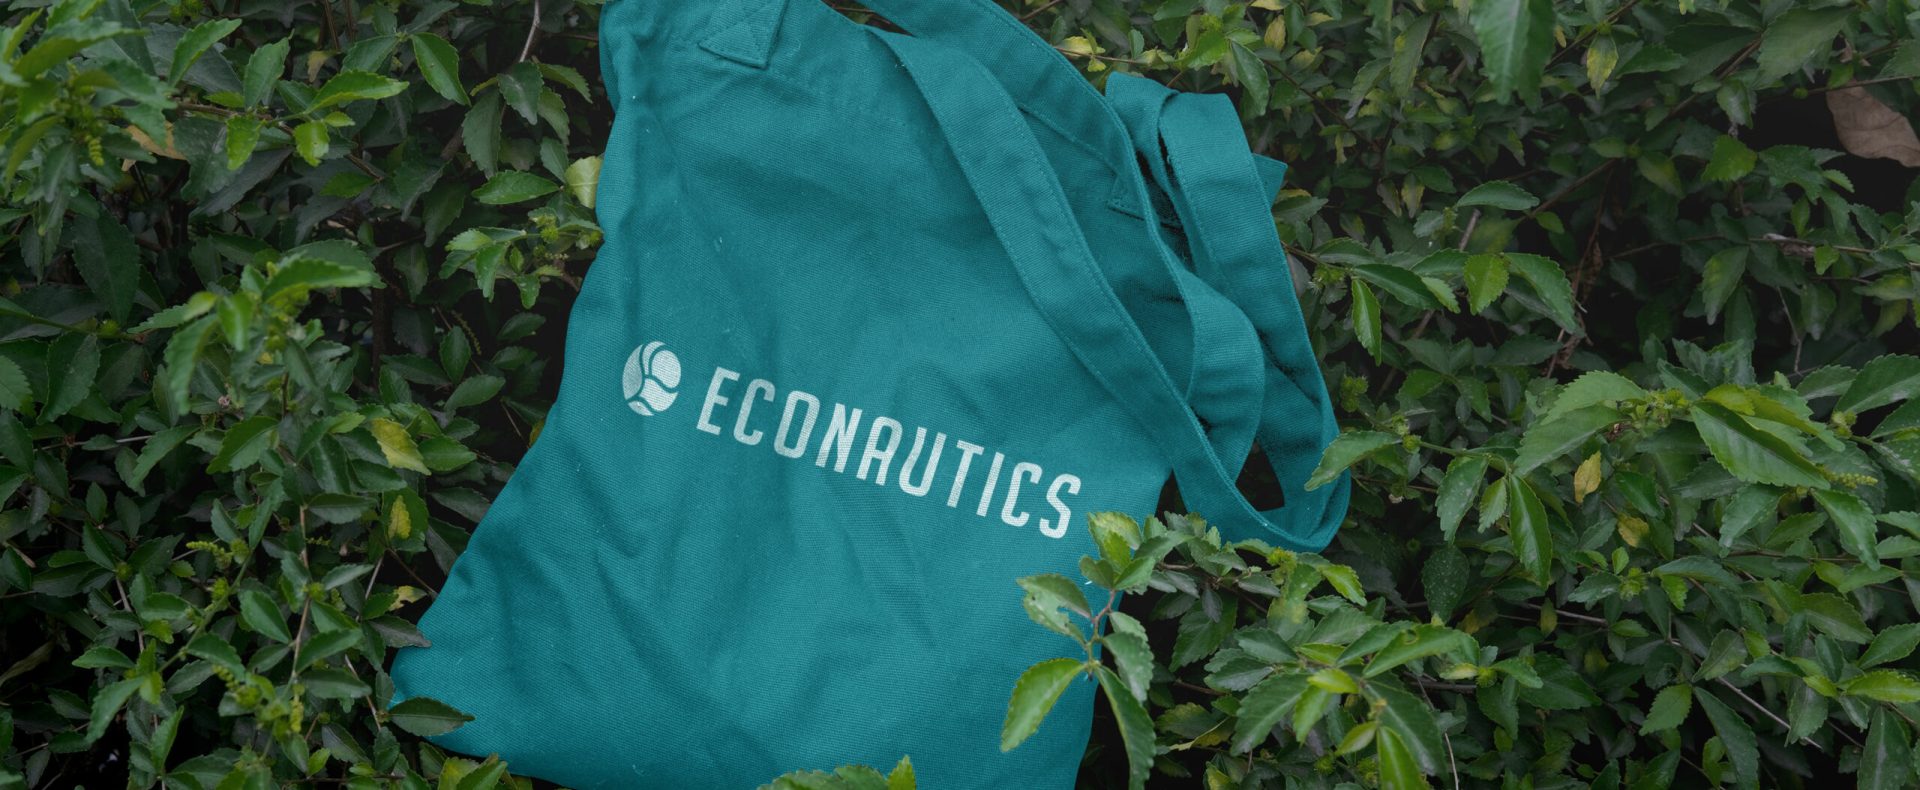 Econautics - Reusable Tote Logo Mockup (2) (1)